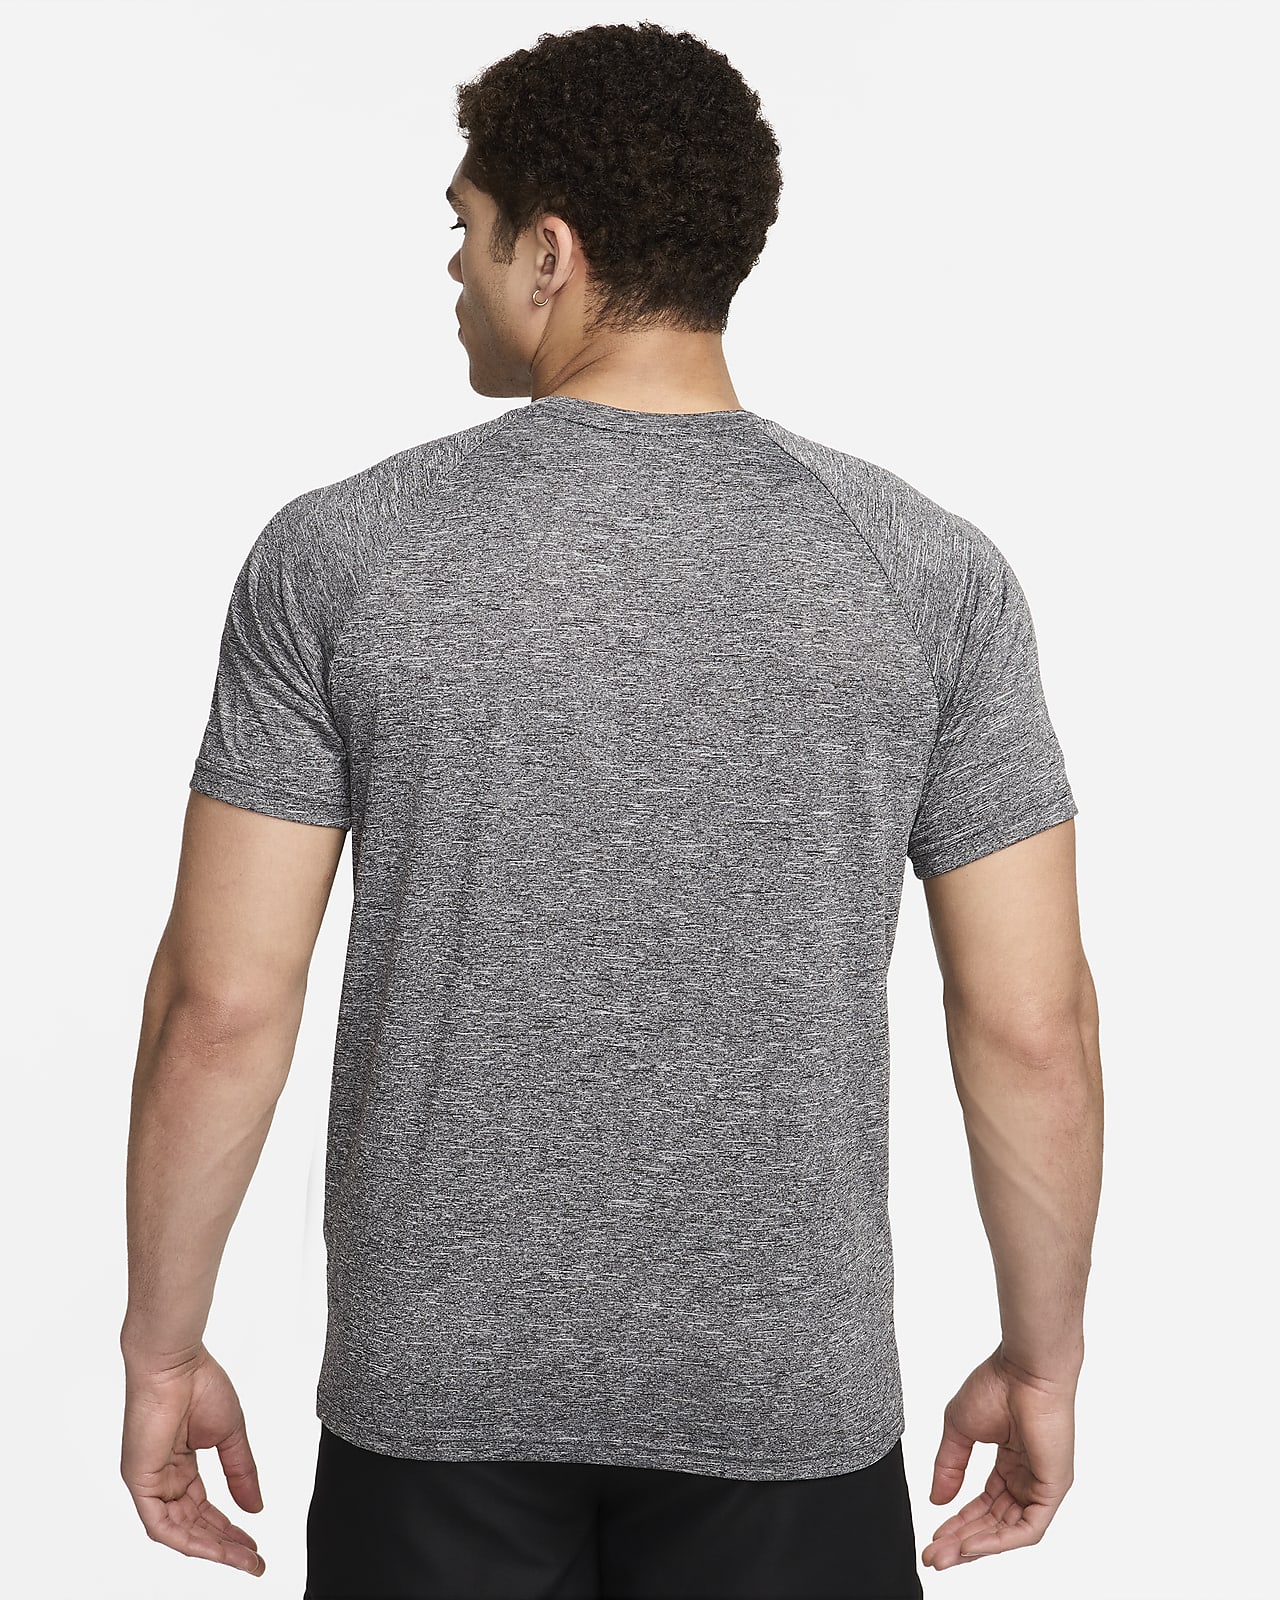 Nike Heather Short Sleeve T-Shirt Grey